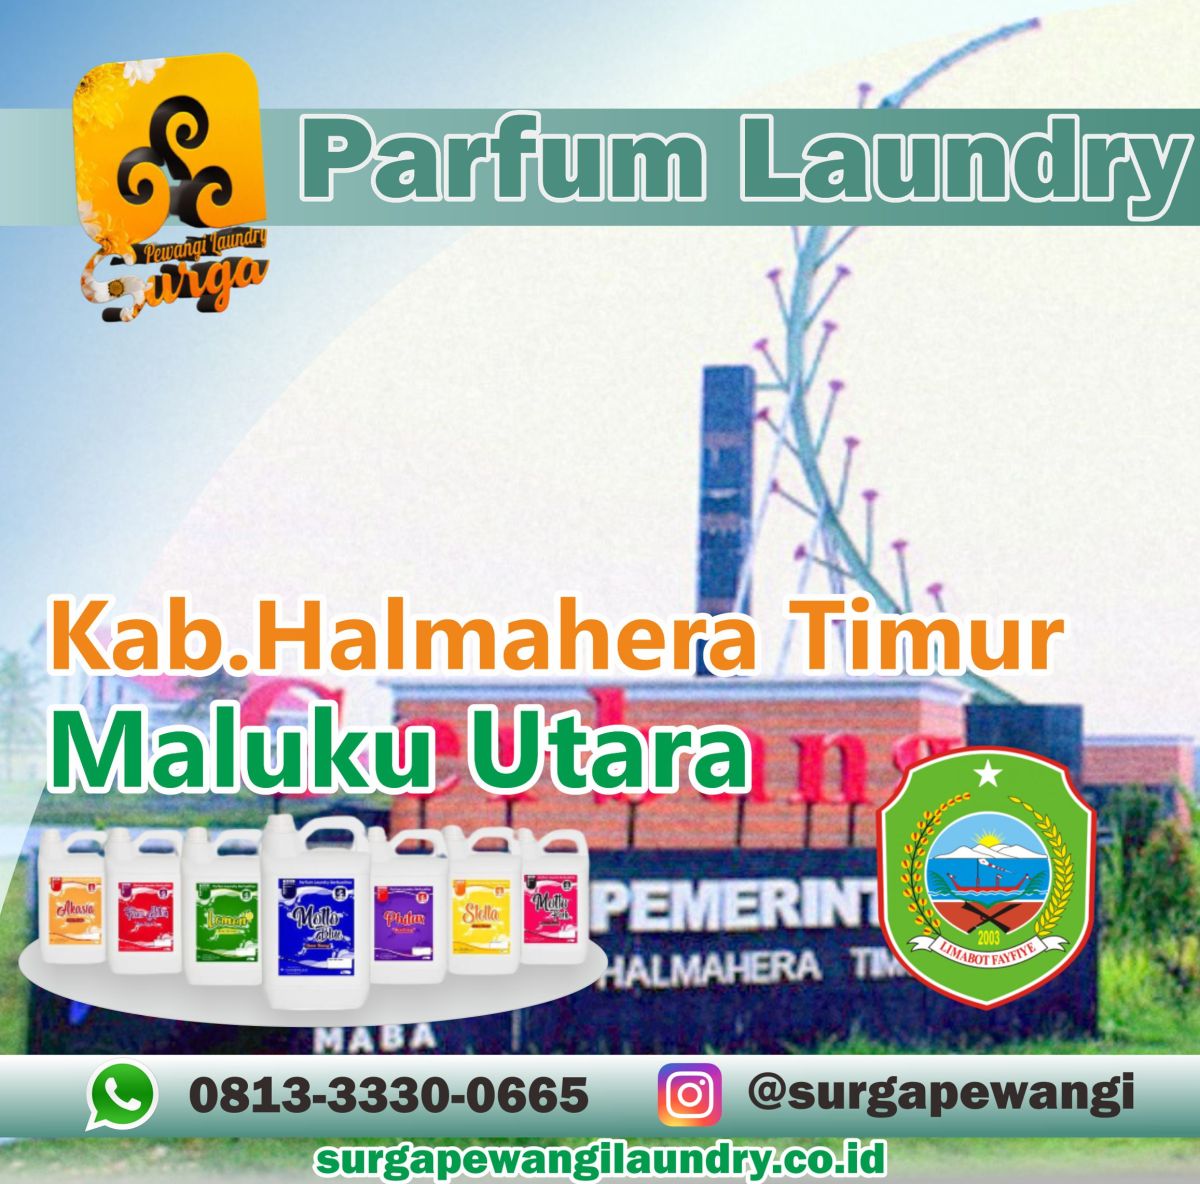 Parfum laundry Kabupaten Halmahera Timur, Maluku Utara